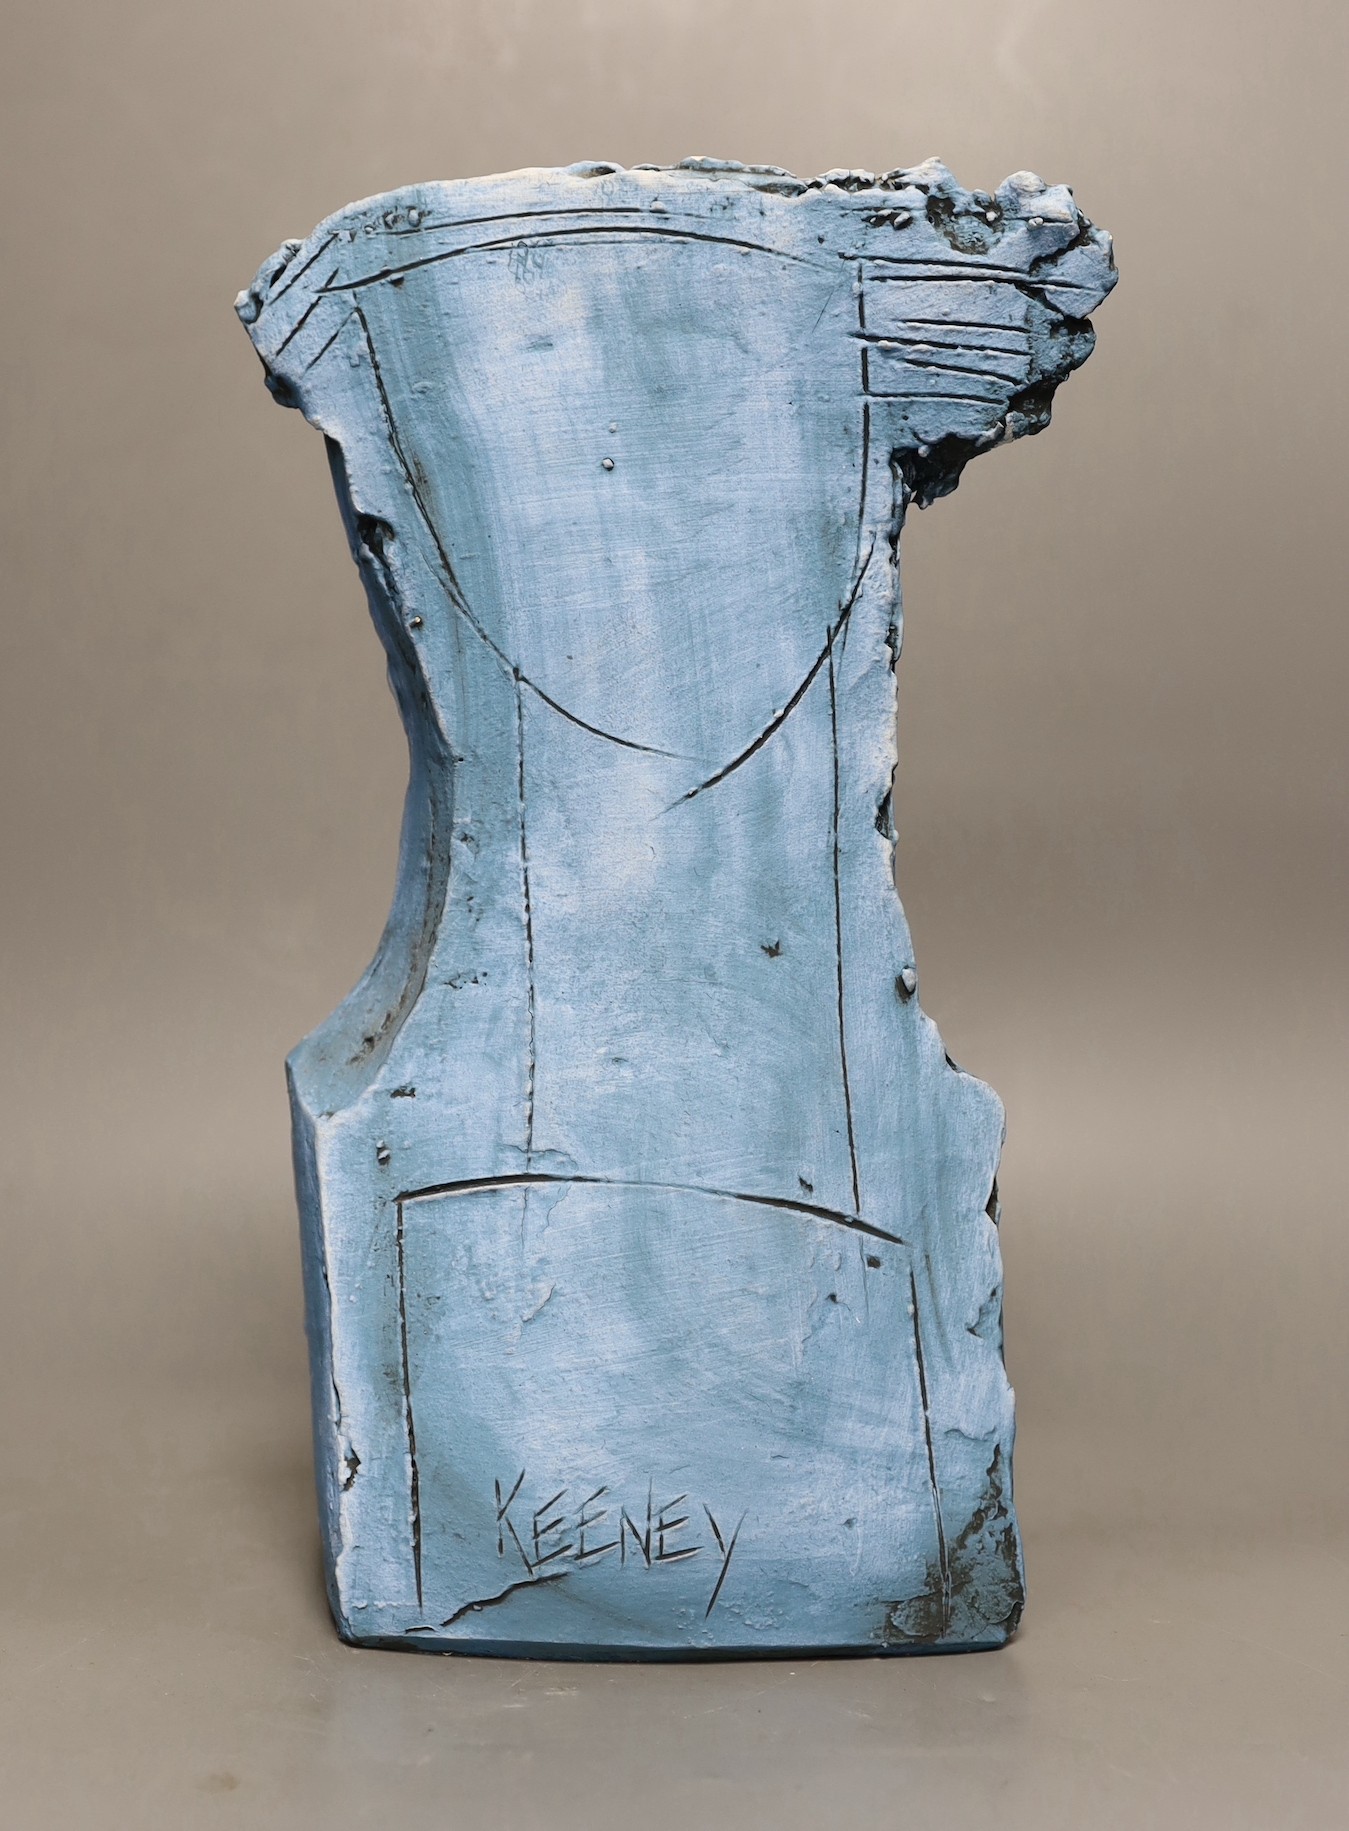 Christy Keeney (b.1958), a signed pottery bust, 33cms high